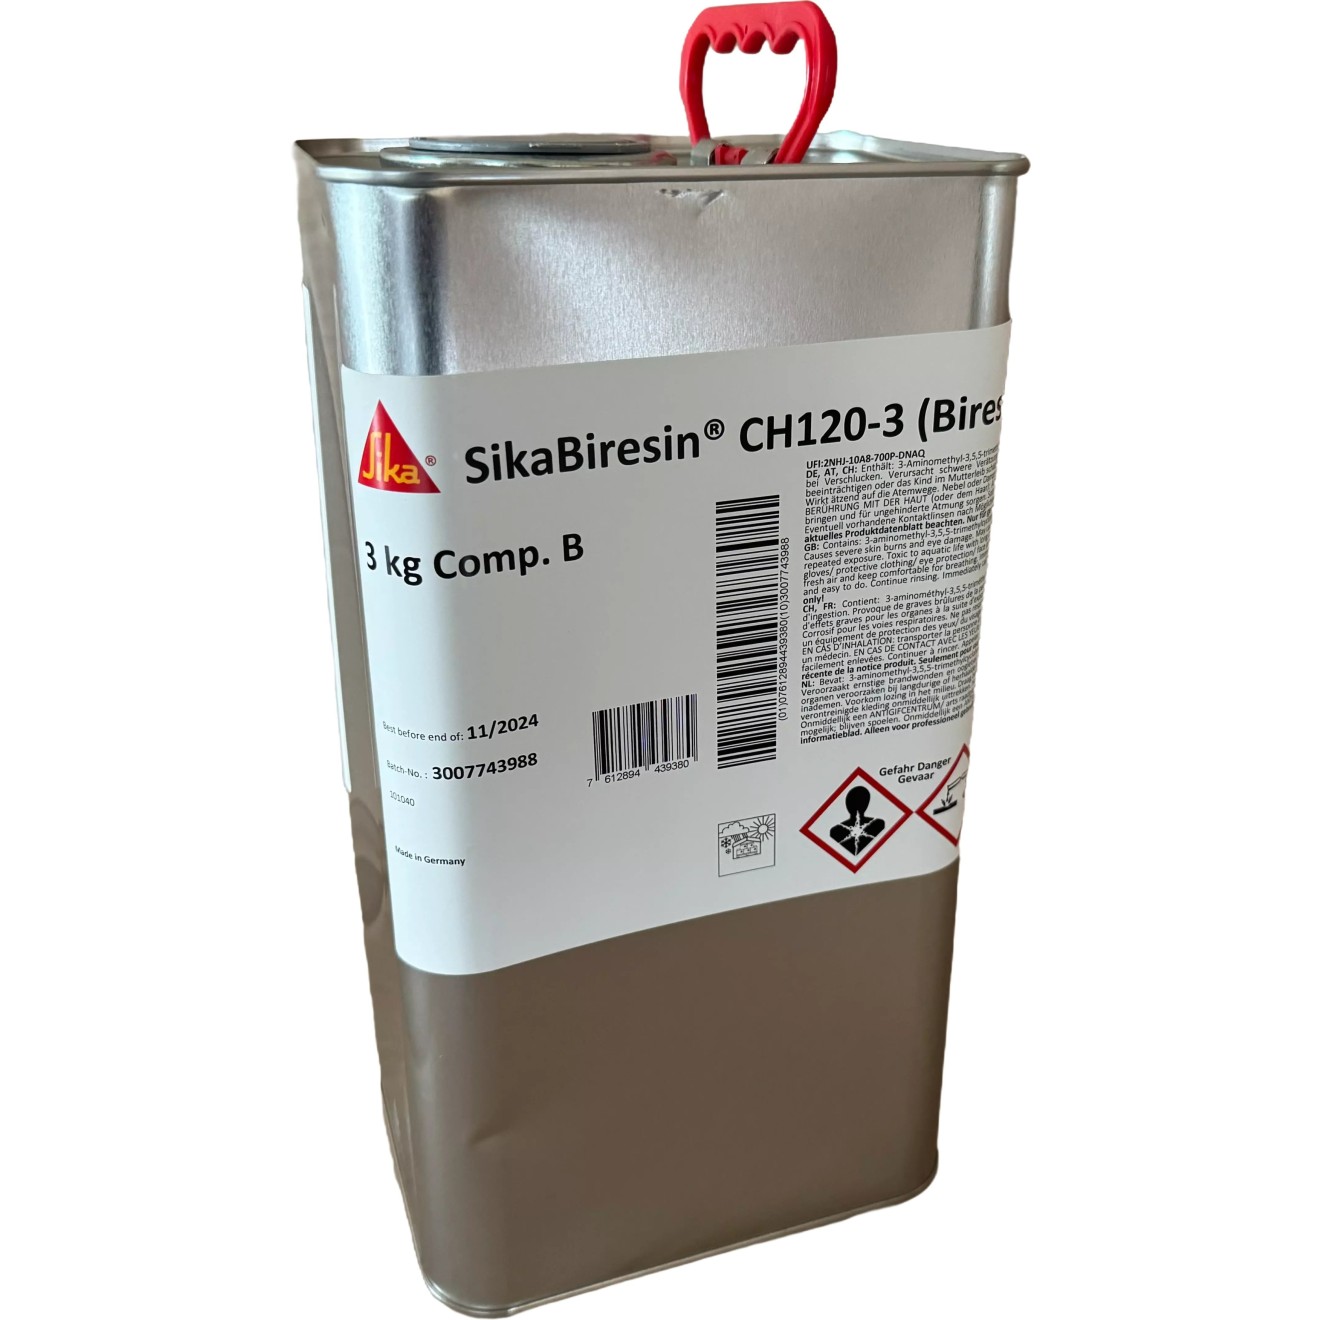 SikaBiresin CH120-3 Hardener